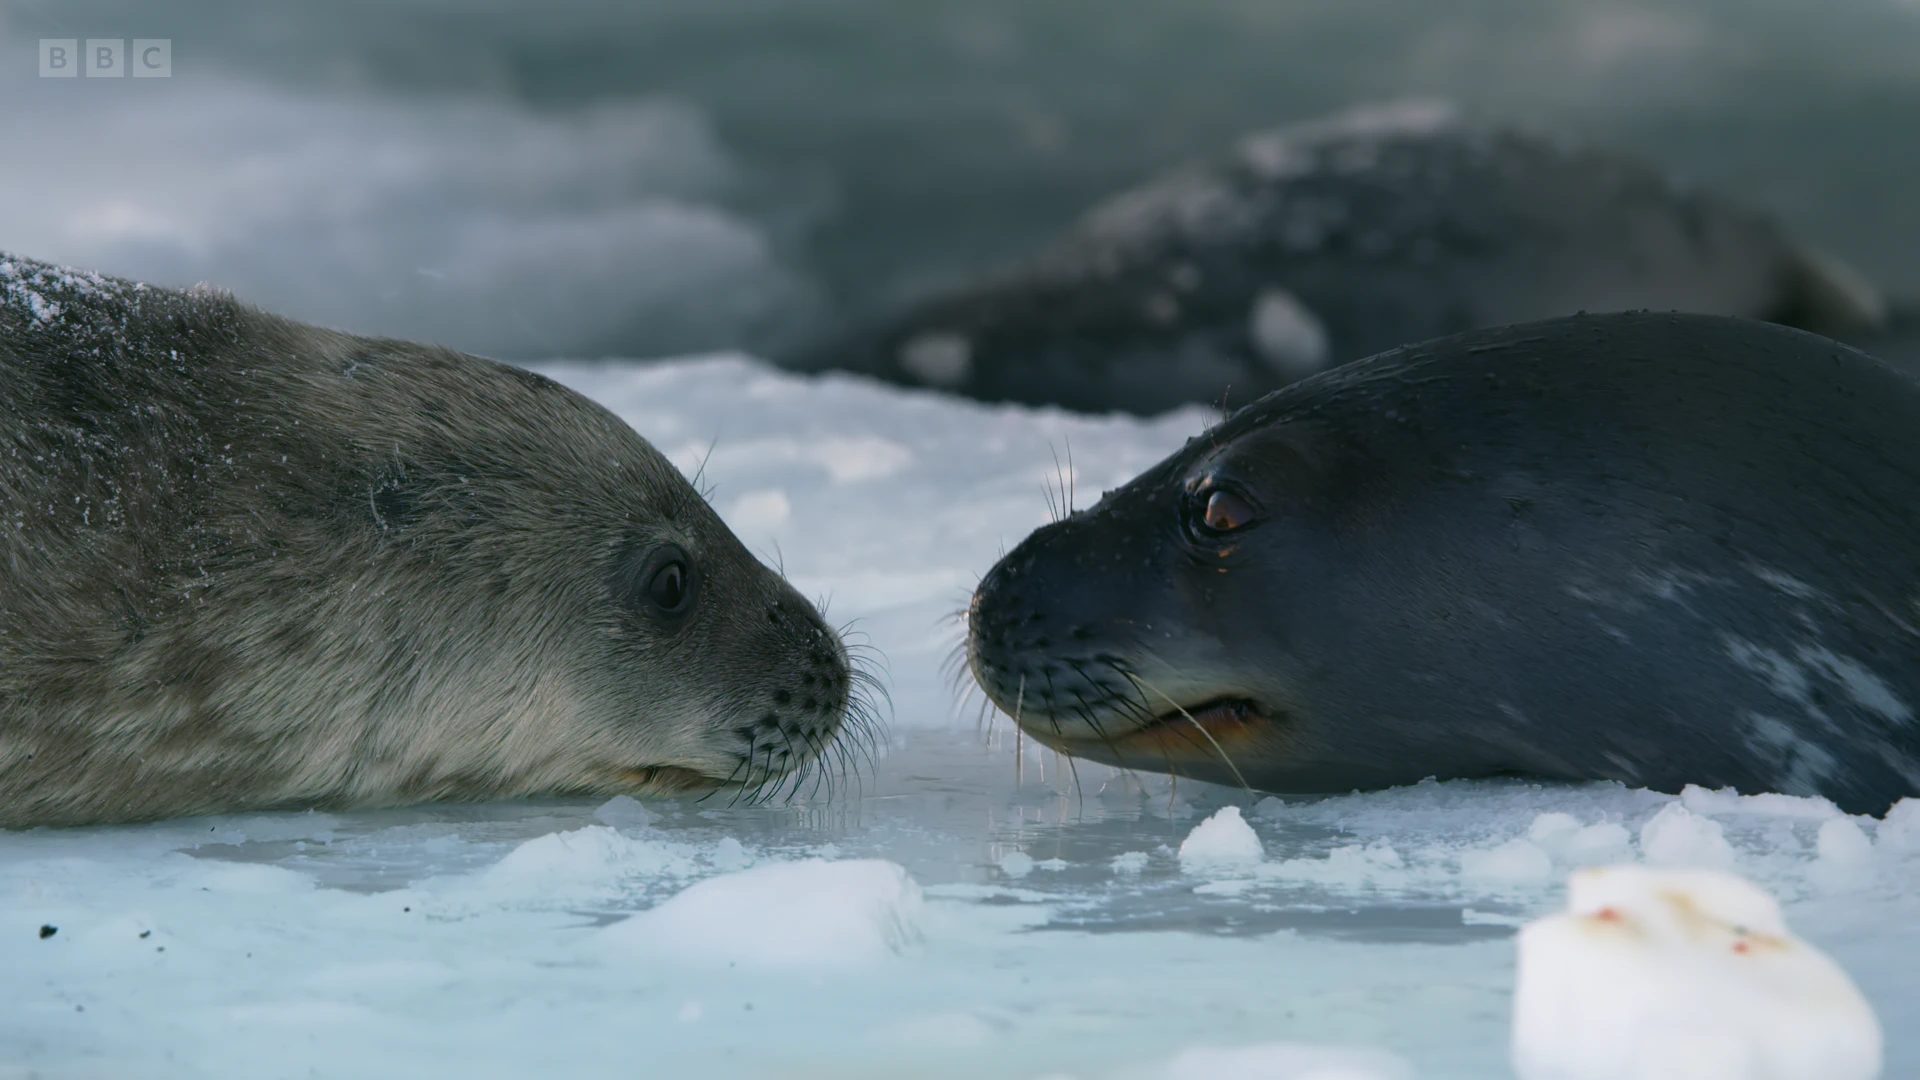 Weddell seal (Leptonychotes weddellii) as shown in Seven Worlds, One Planet - Antarctica